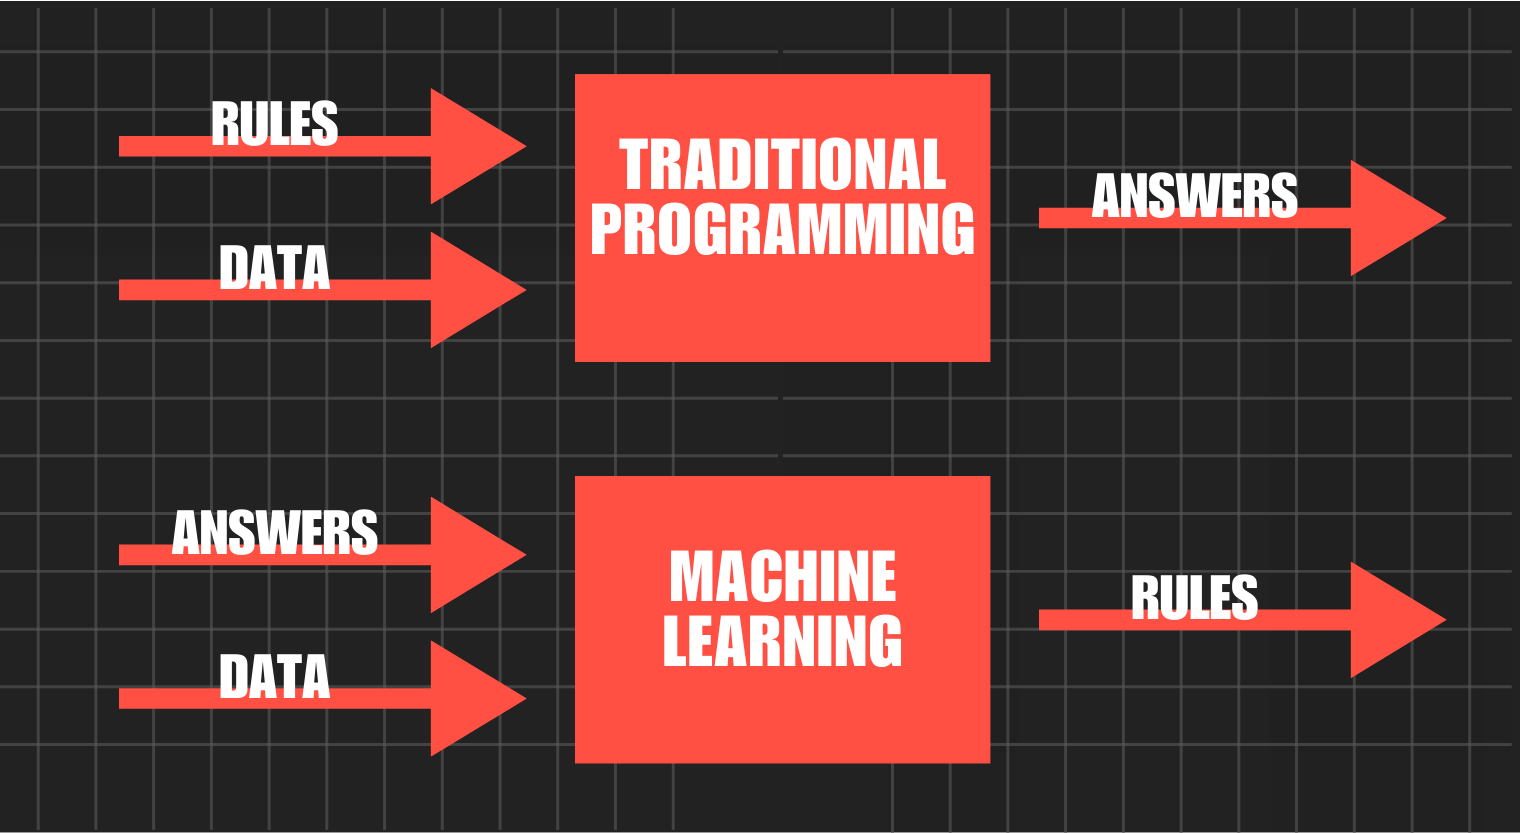 Programming vs. AI
Traditional programming vs machine learning